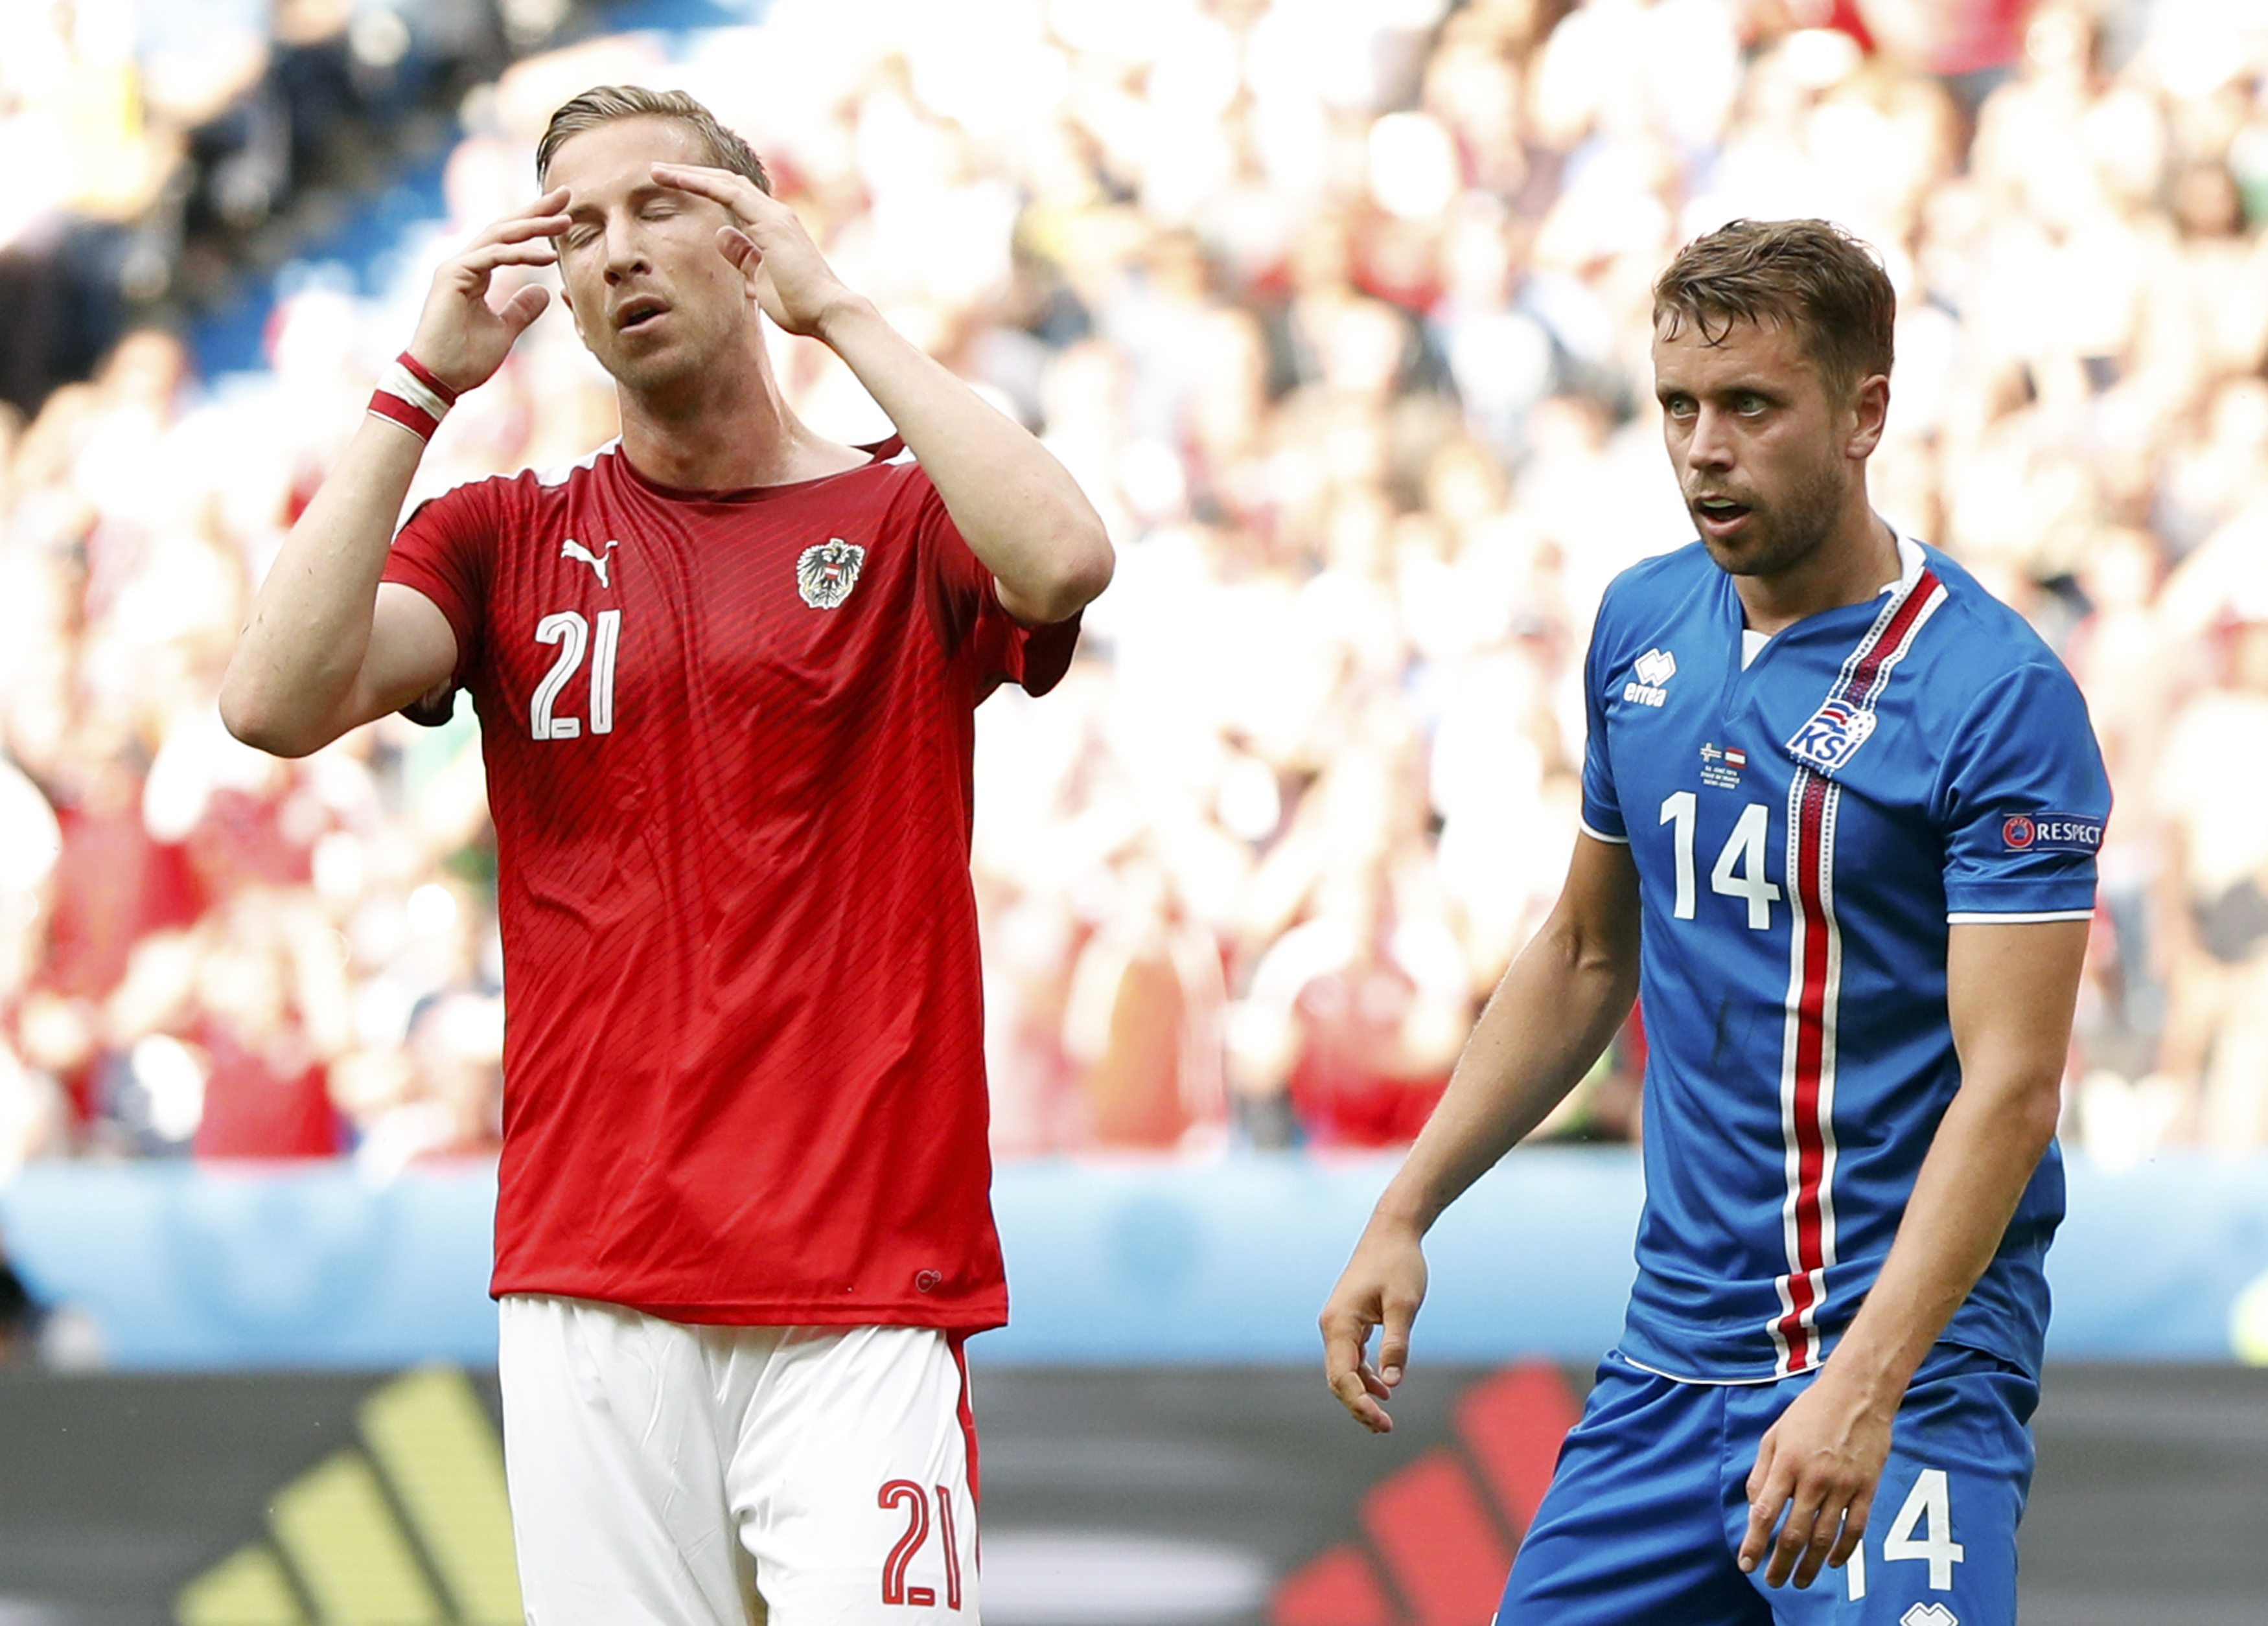 Football Soccer - Iceland v Austria - EURO 2016 - Group F - Stade de France, Saint-Denis near Paris, France - 22/6/16 - Austria's Marc Janko reacts. REUTERS/John Sibley